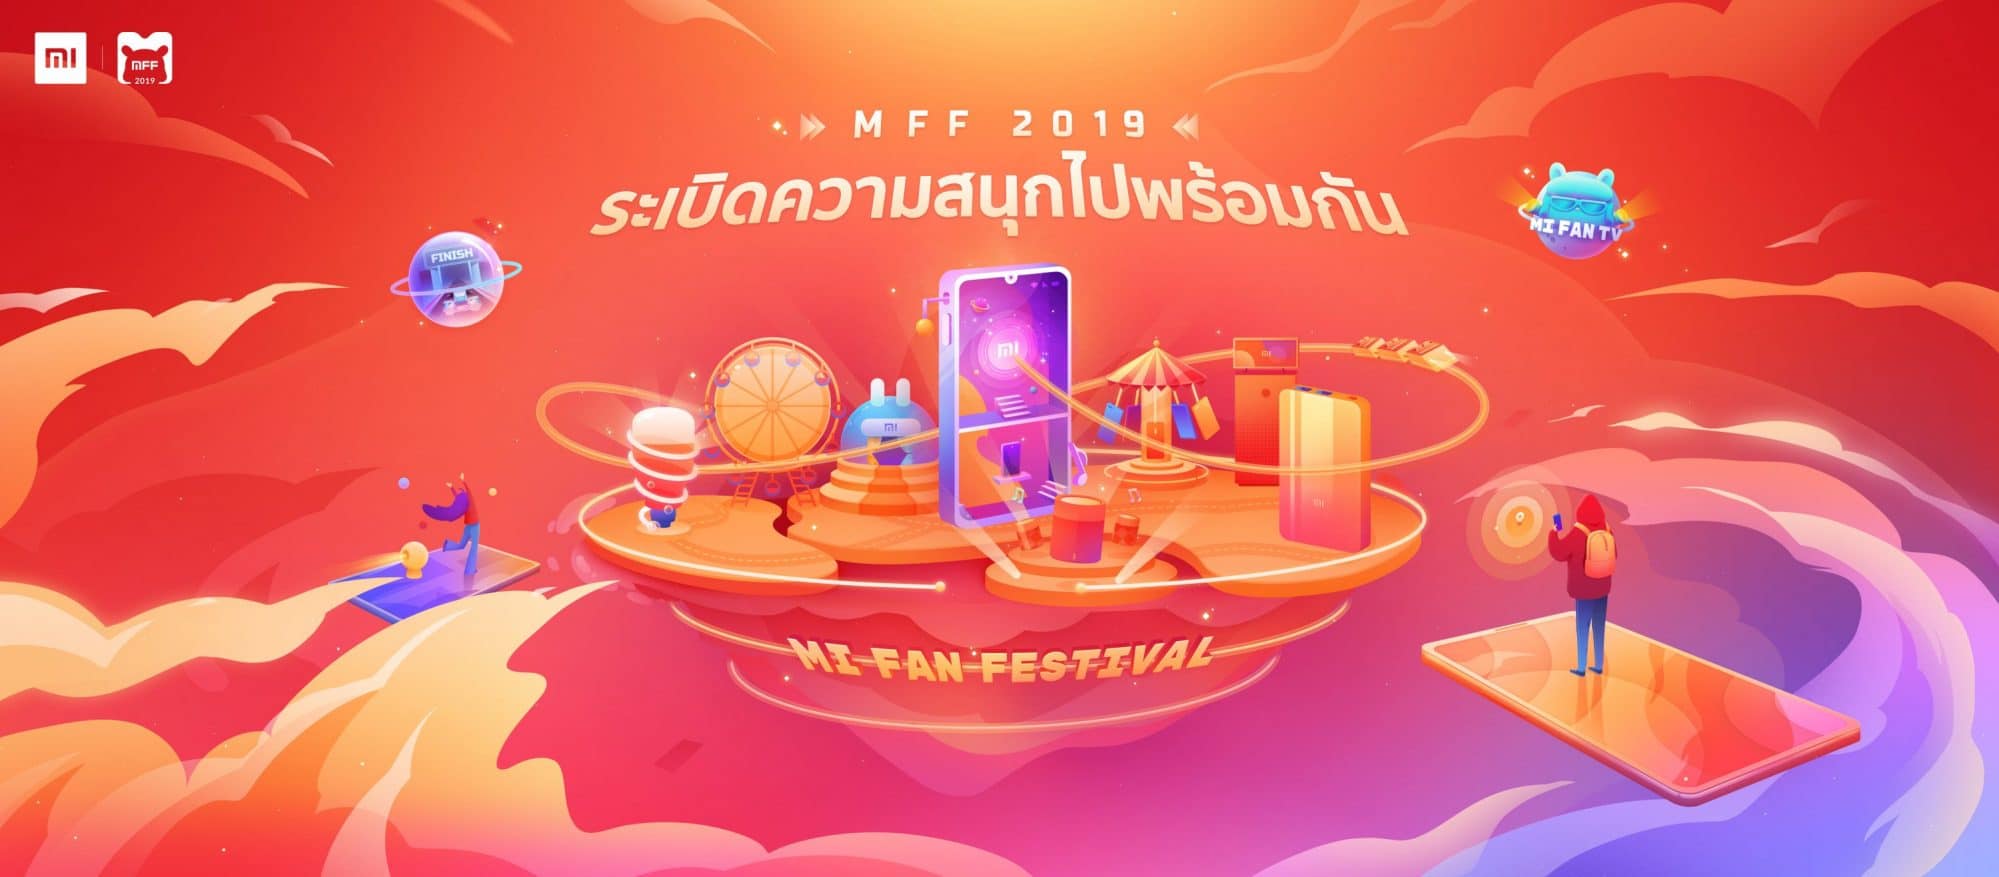 Xiaomi จัด Mi Fan Festival พร้อมองสมนาคุณและโปรโมชันเพื่อ Mi Fans โดยเฉพาะ 1